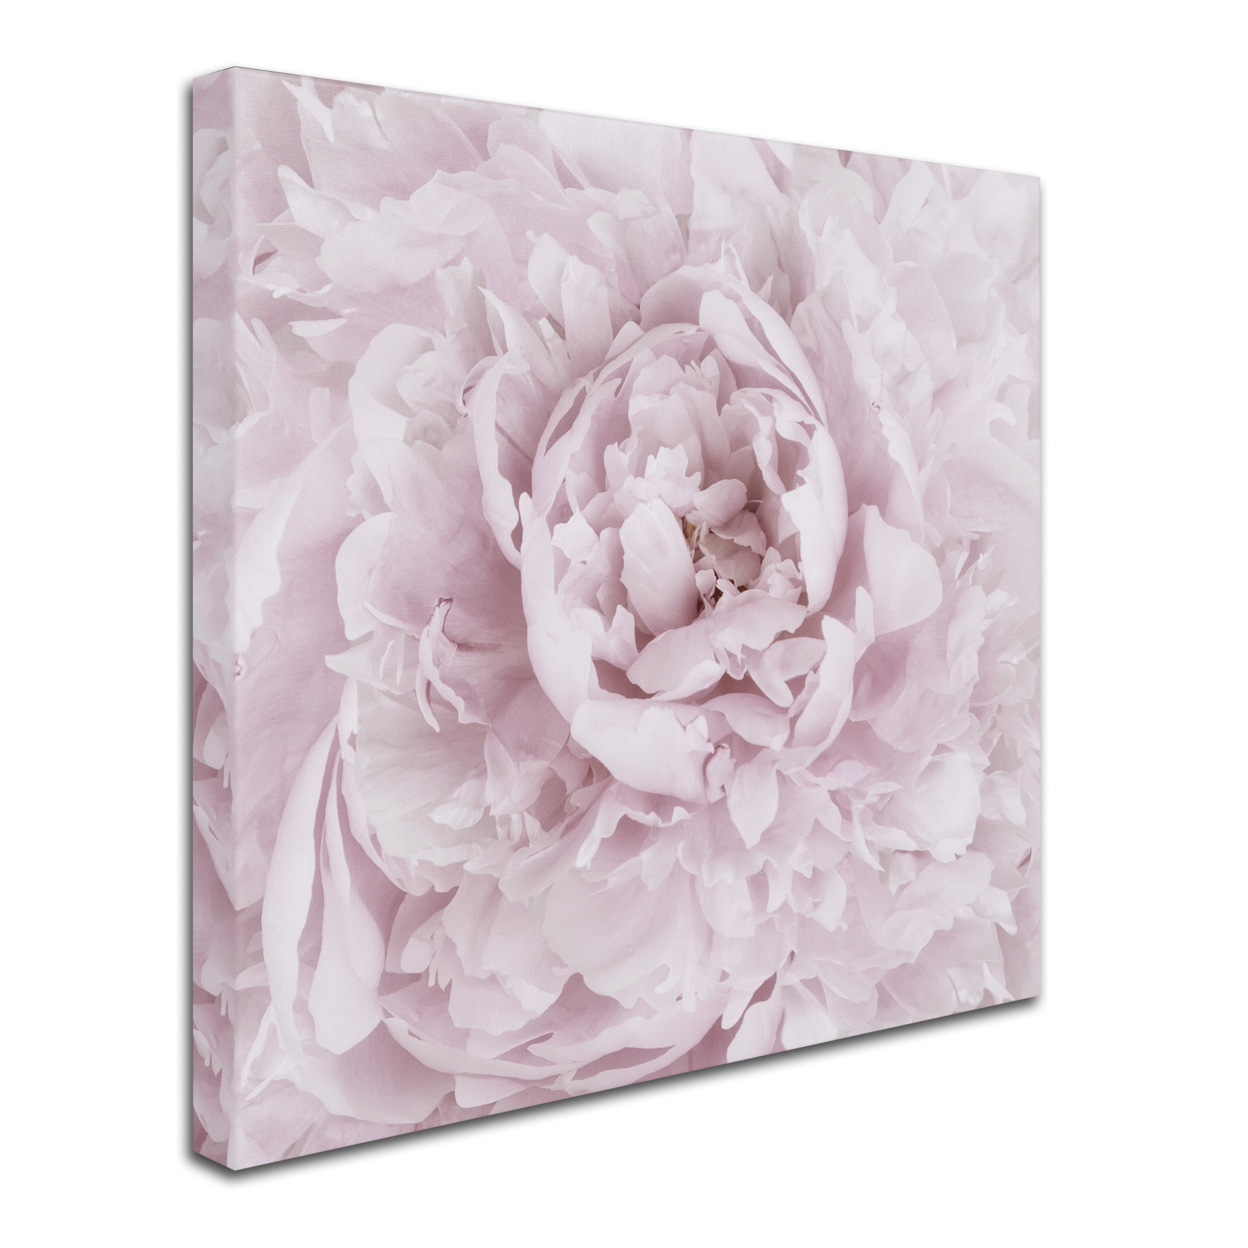 Cora Niele 'Pink Peony Flower' Huge Canvas Art 35 X 35